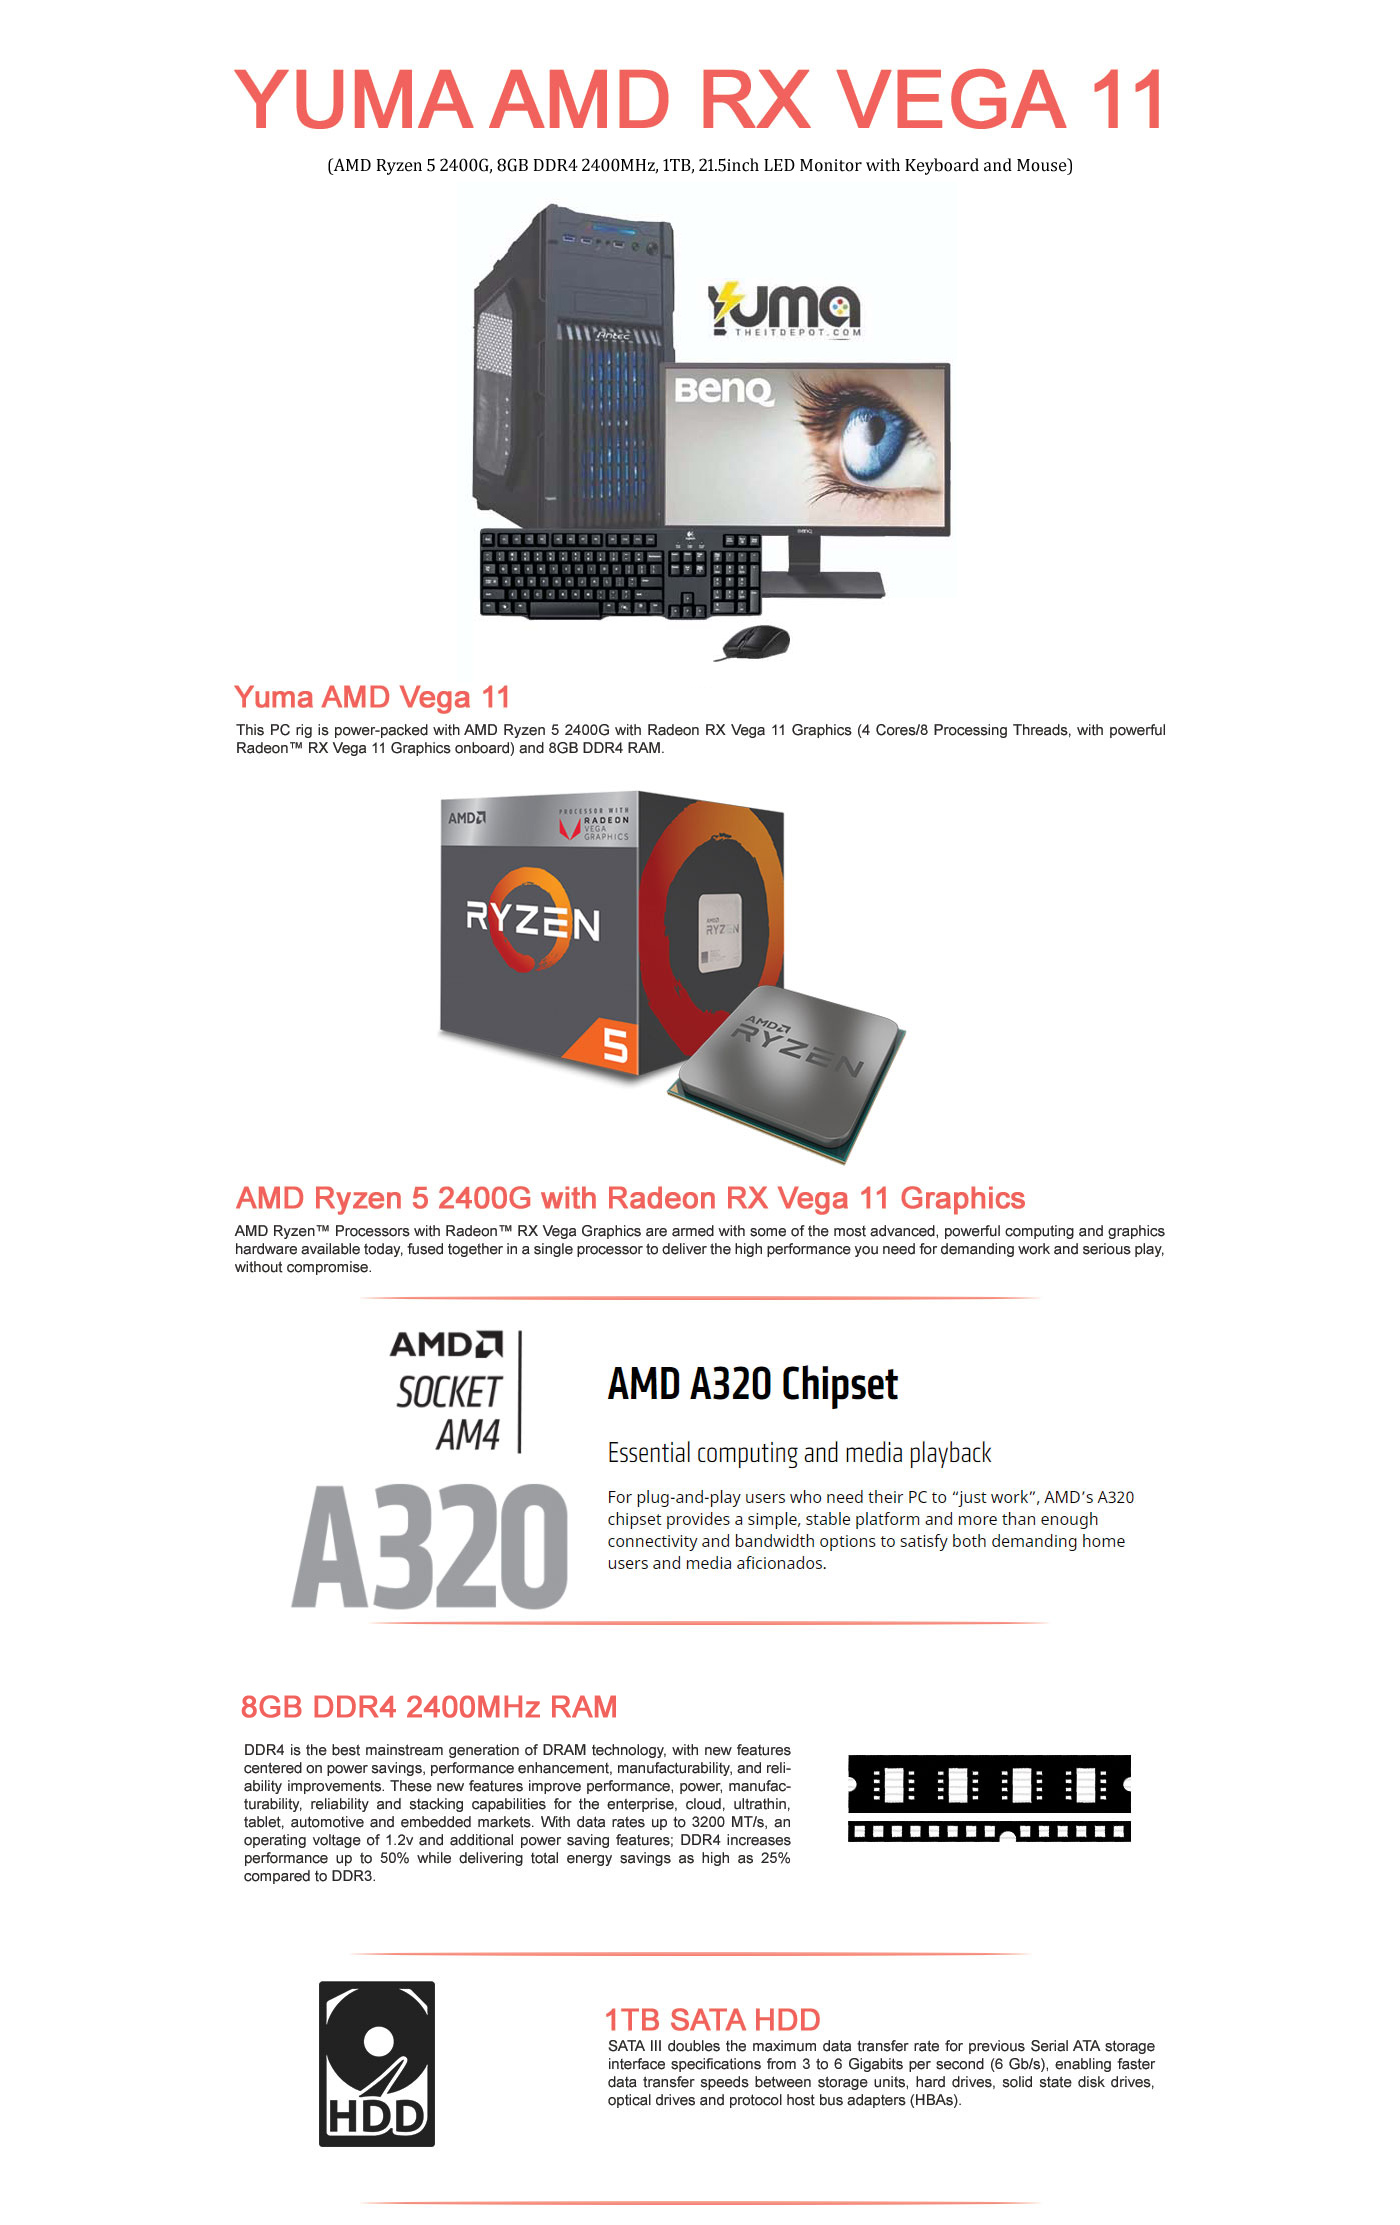  Buy Online Yuma AMD RX Vega 11 (AMD Ryzen 5 2400G, 8GB DDR4 2400MHz, 1TB, 21.5inch LED Monitor with Keyboard and Mouse)